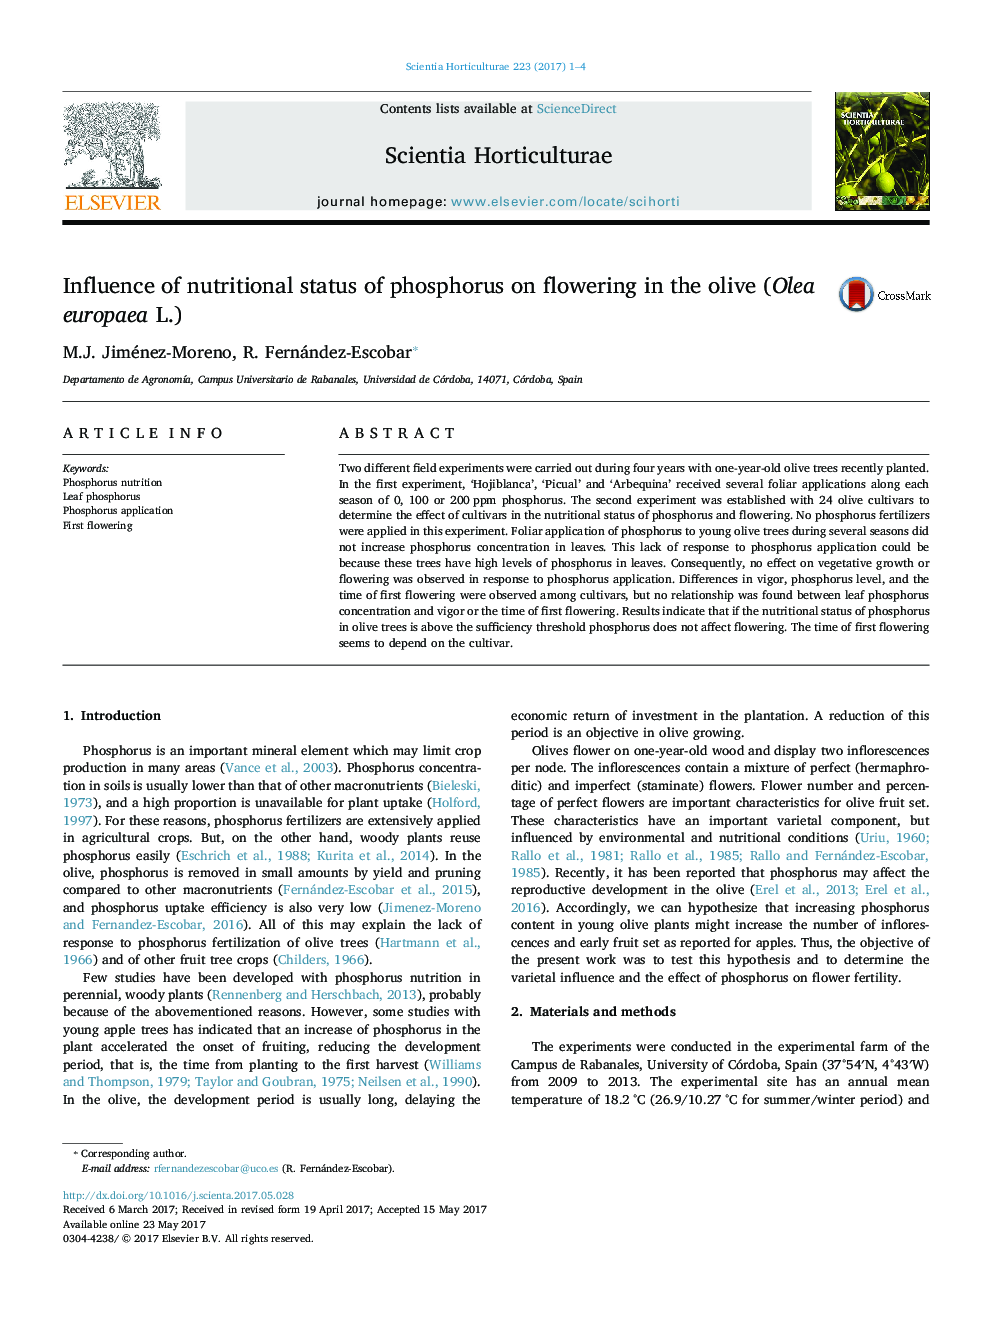 Influence of nutritional status of phosphorus on flowering in the olive (Olea europaea L.)